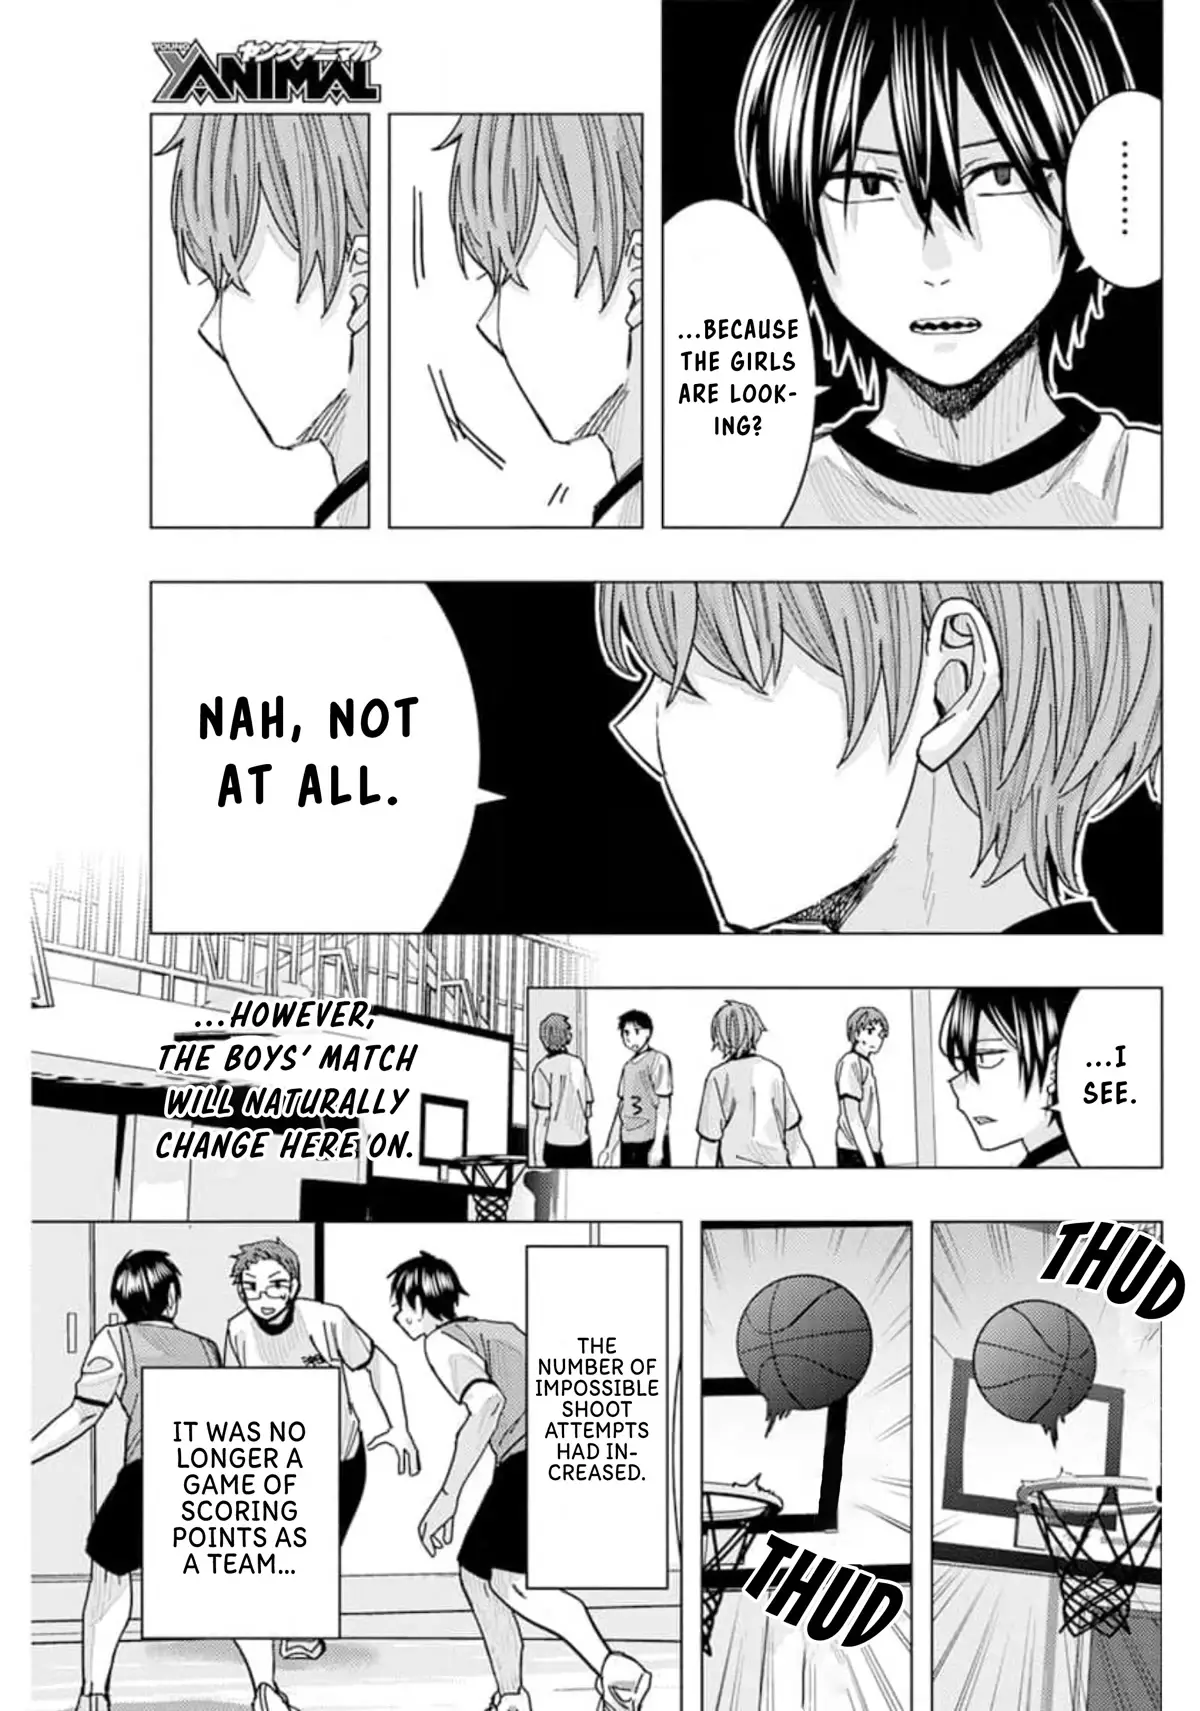 "nobukuni-San" Does She Like Me? - 22 page 10-ec7aeec2